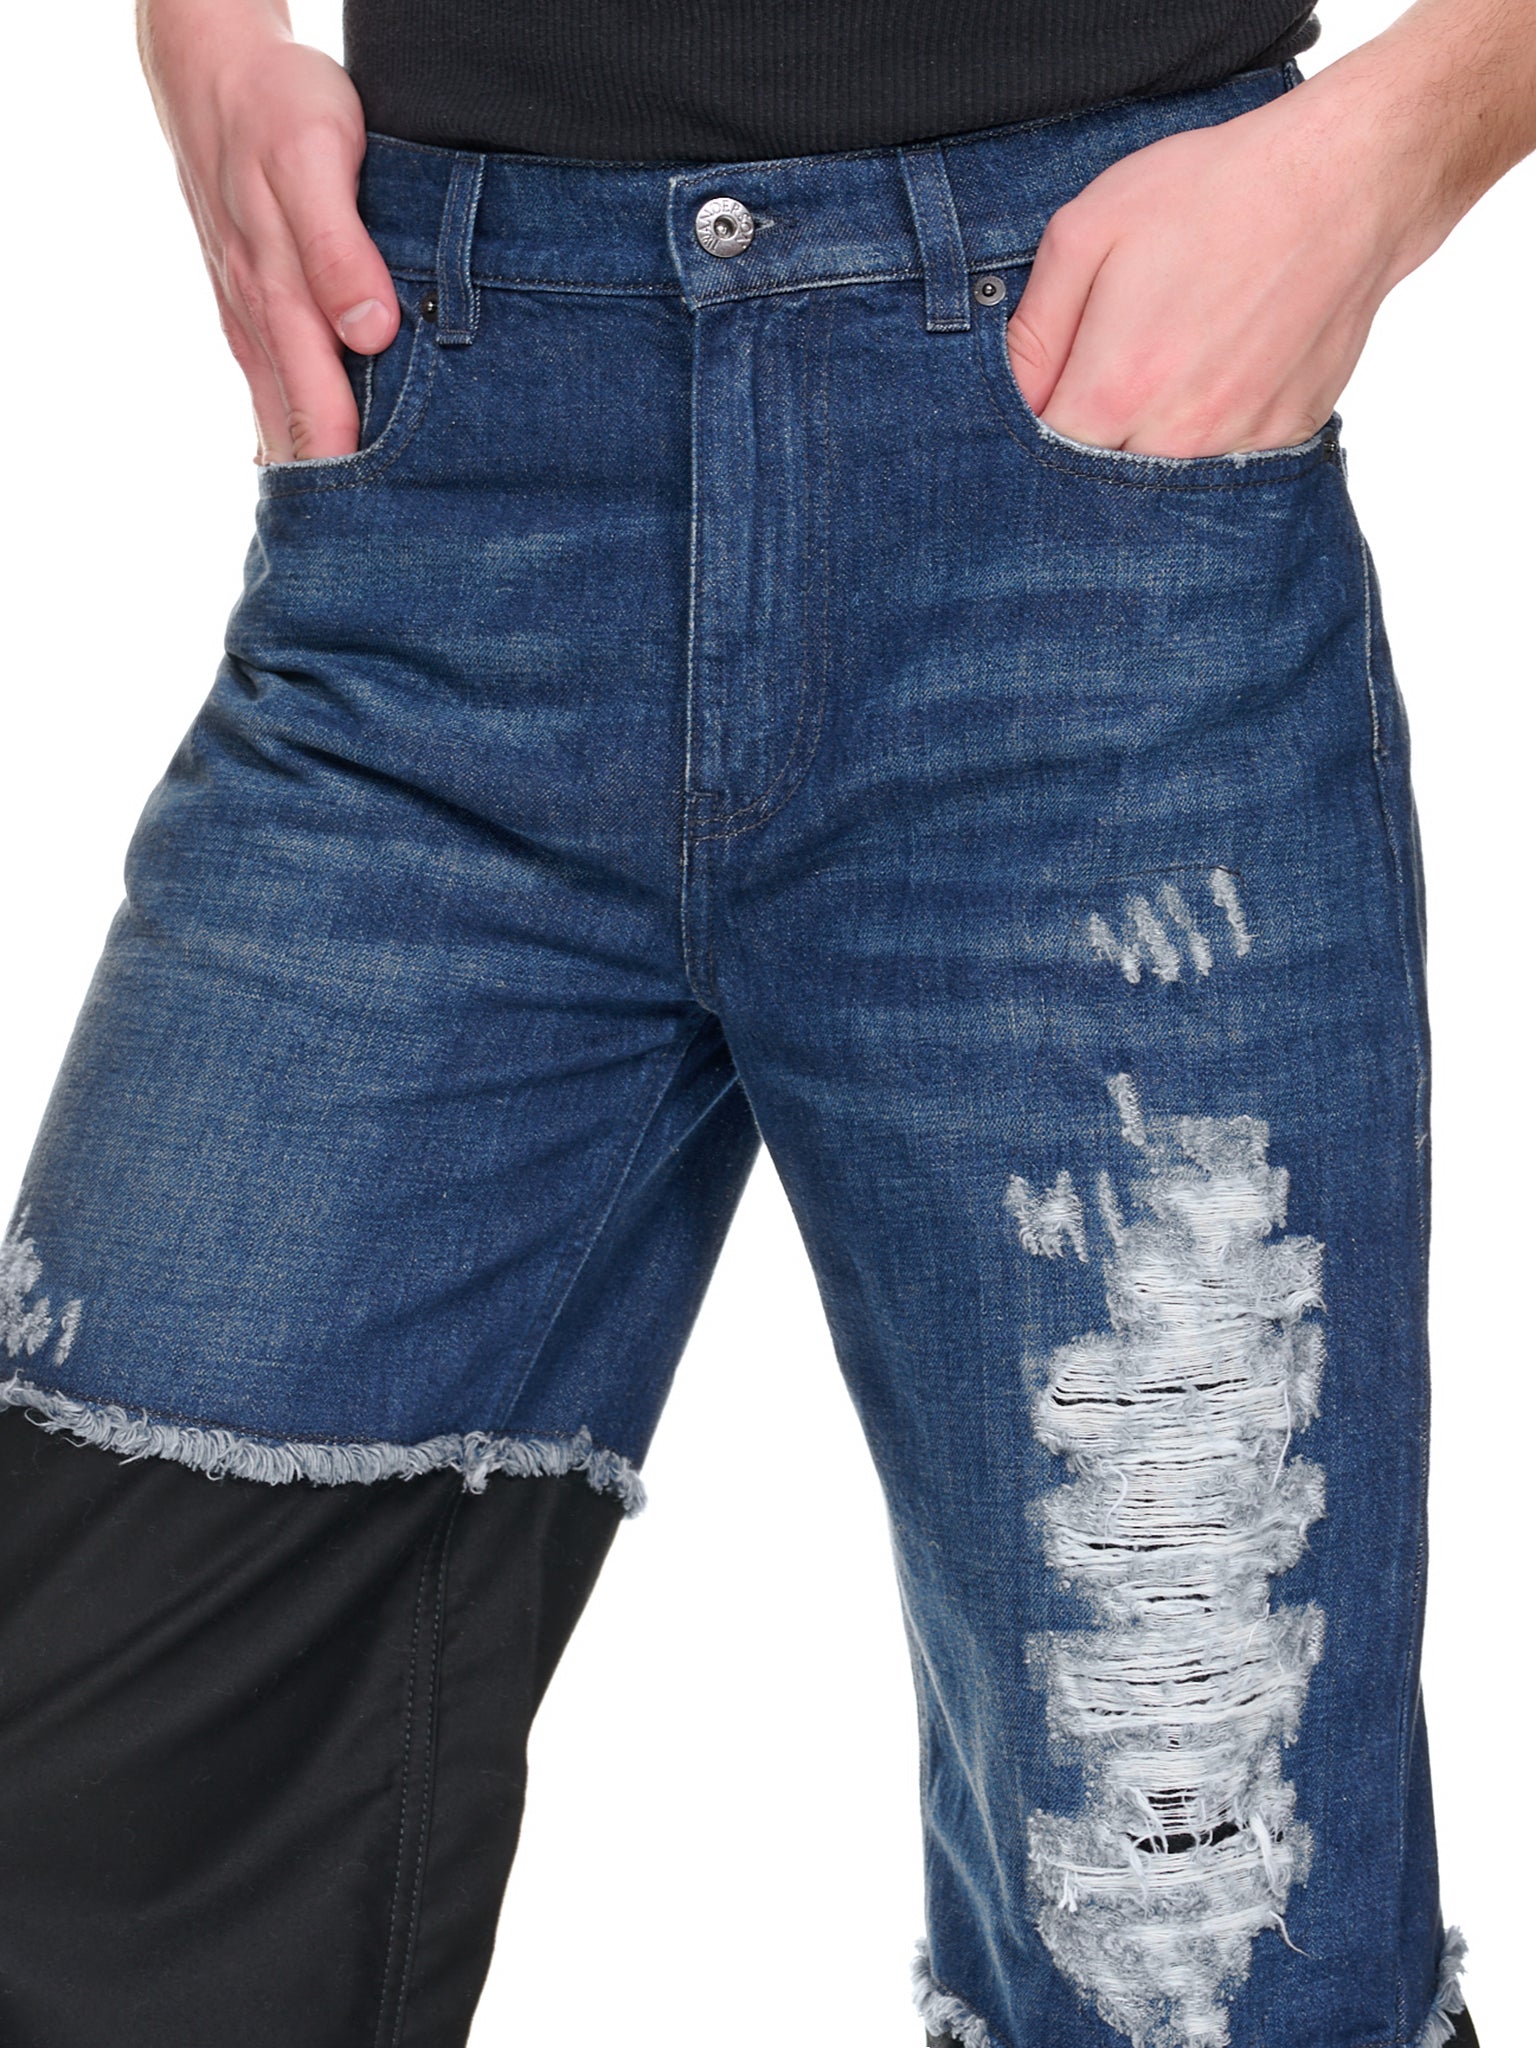 JW ANDERSON Distressed Denim Pants | H. Lorenzo - detail 2